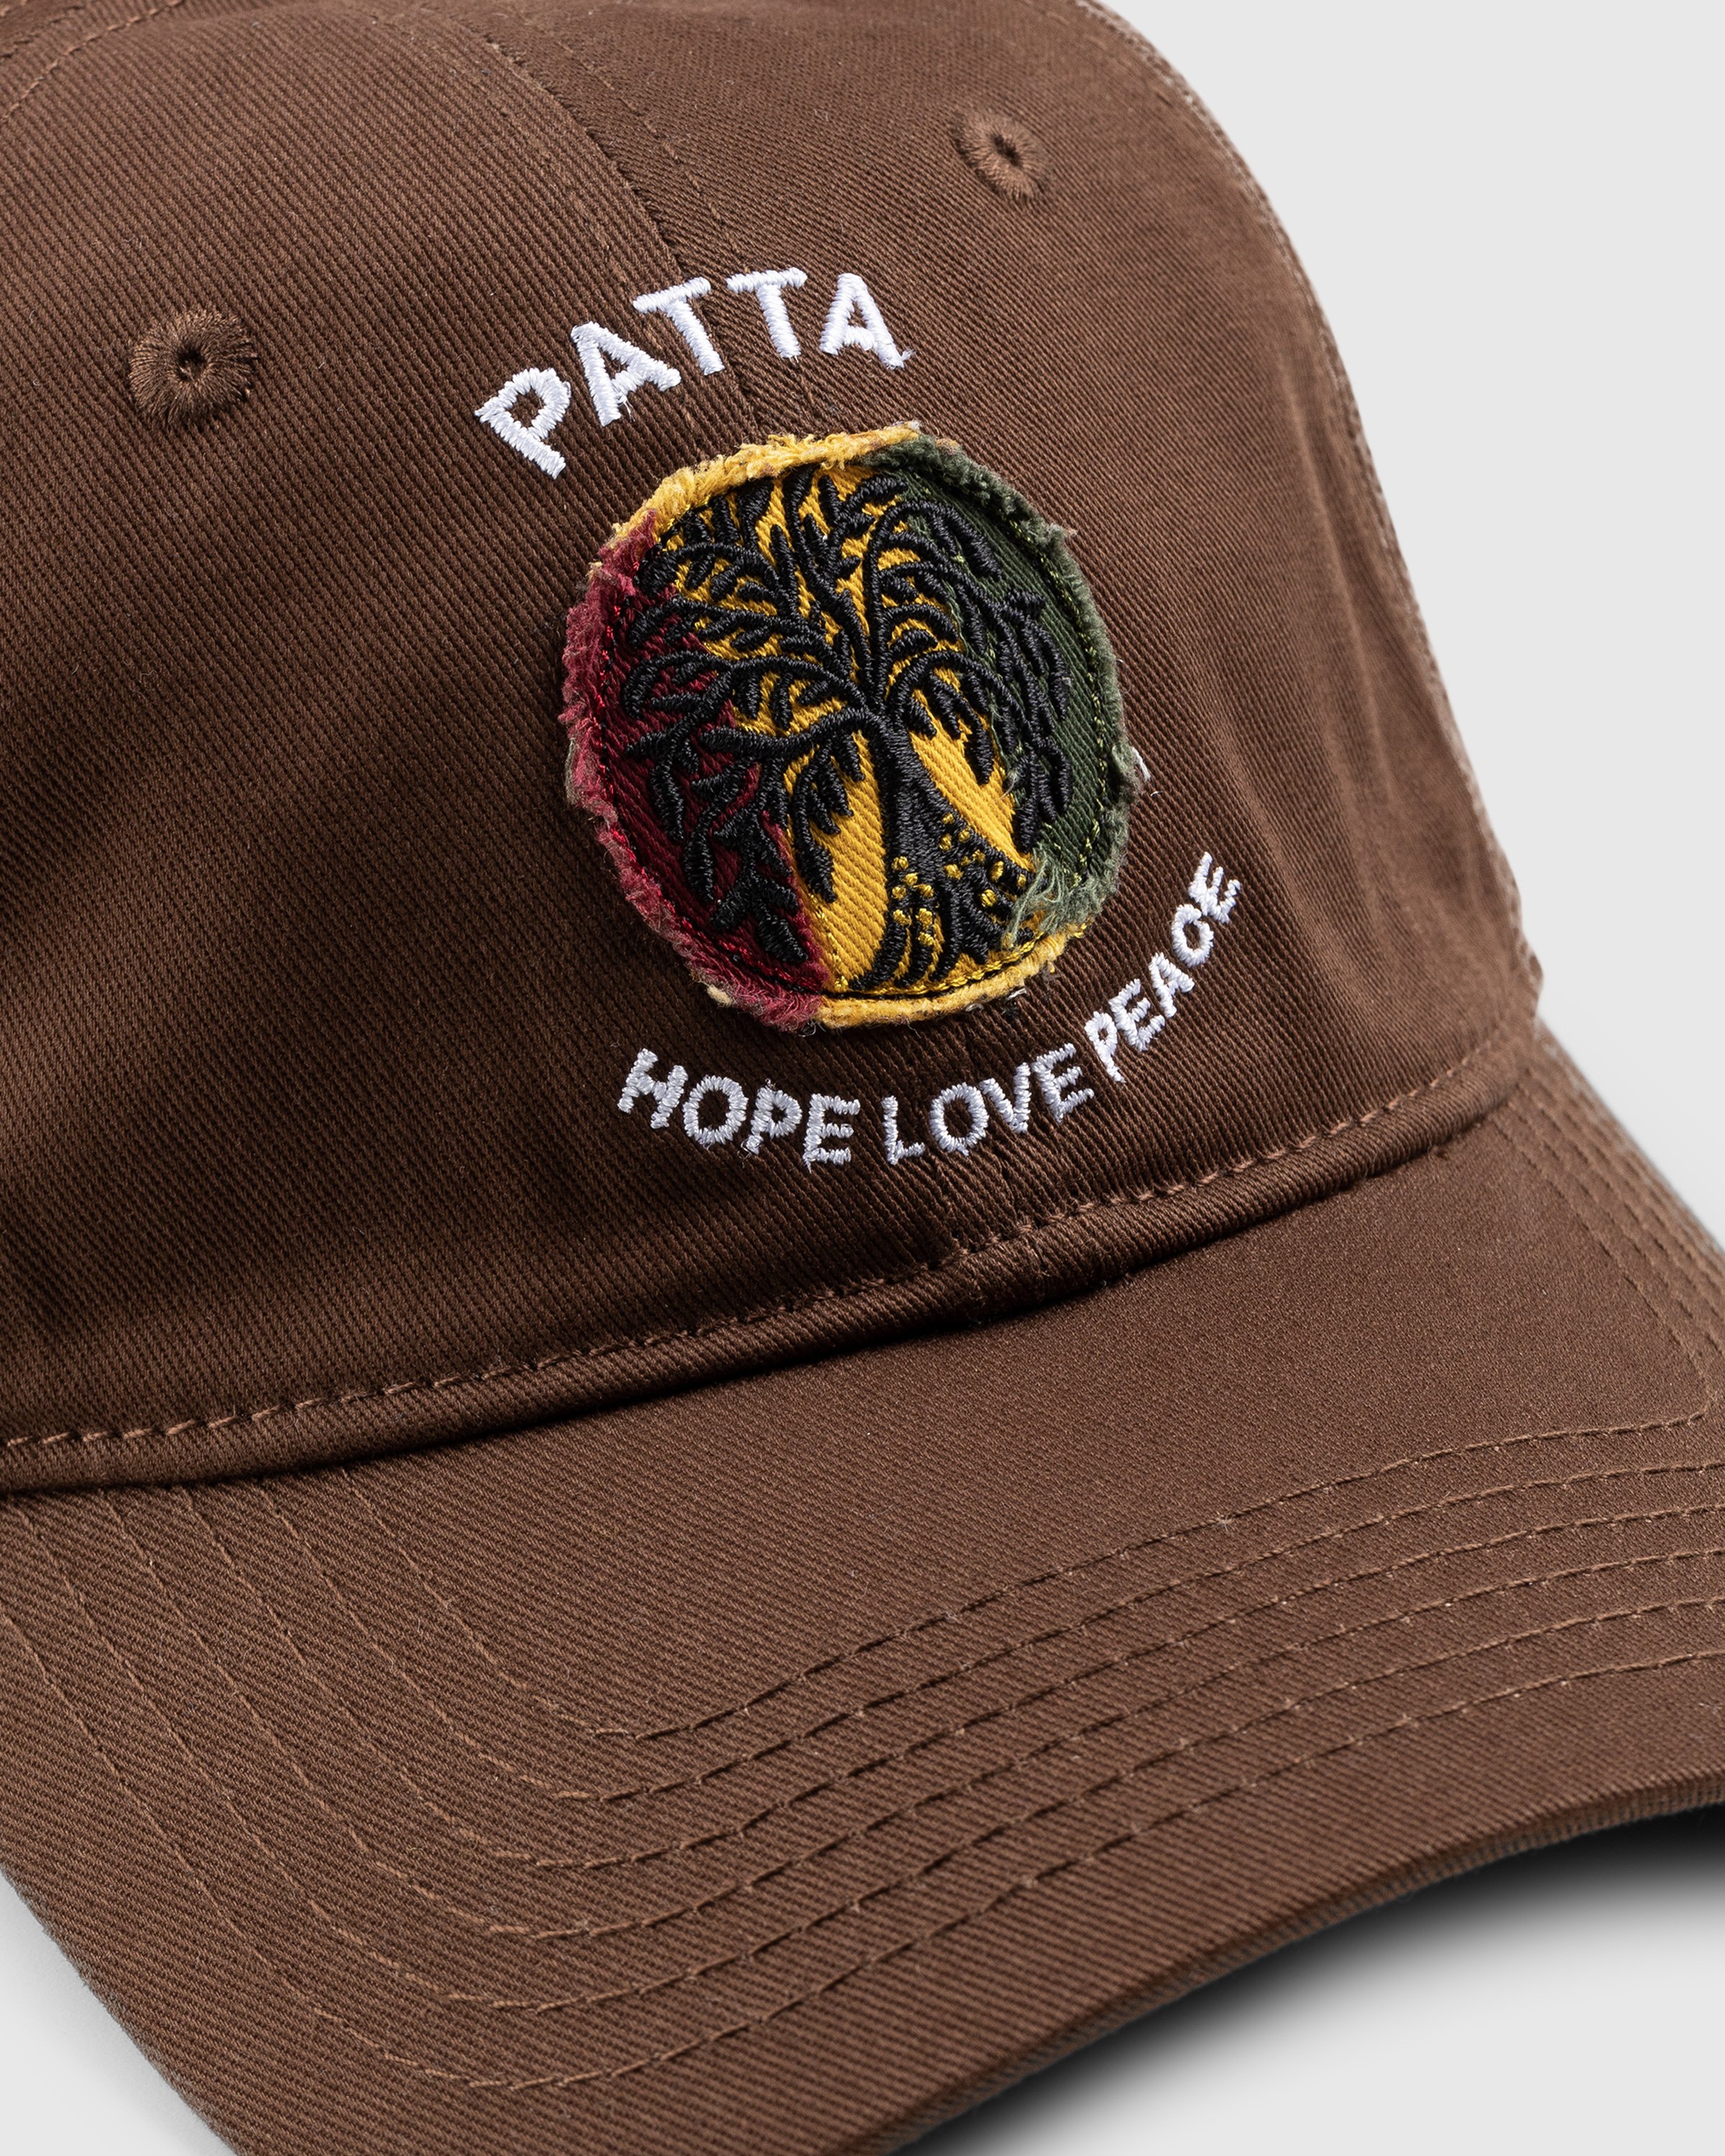 Patta - Hope Love Peace Sports Cap - Accessories - Brown - Image 4